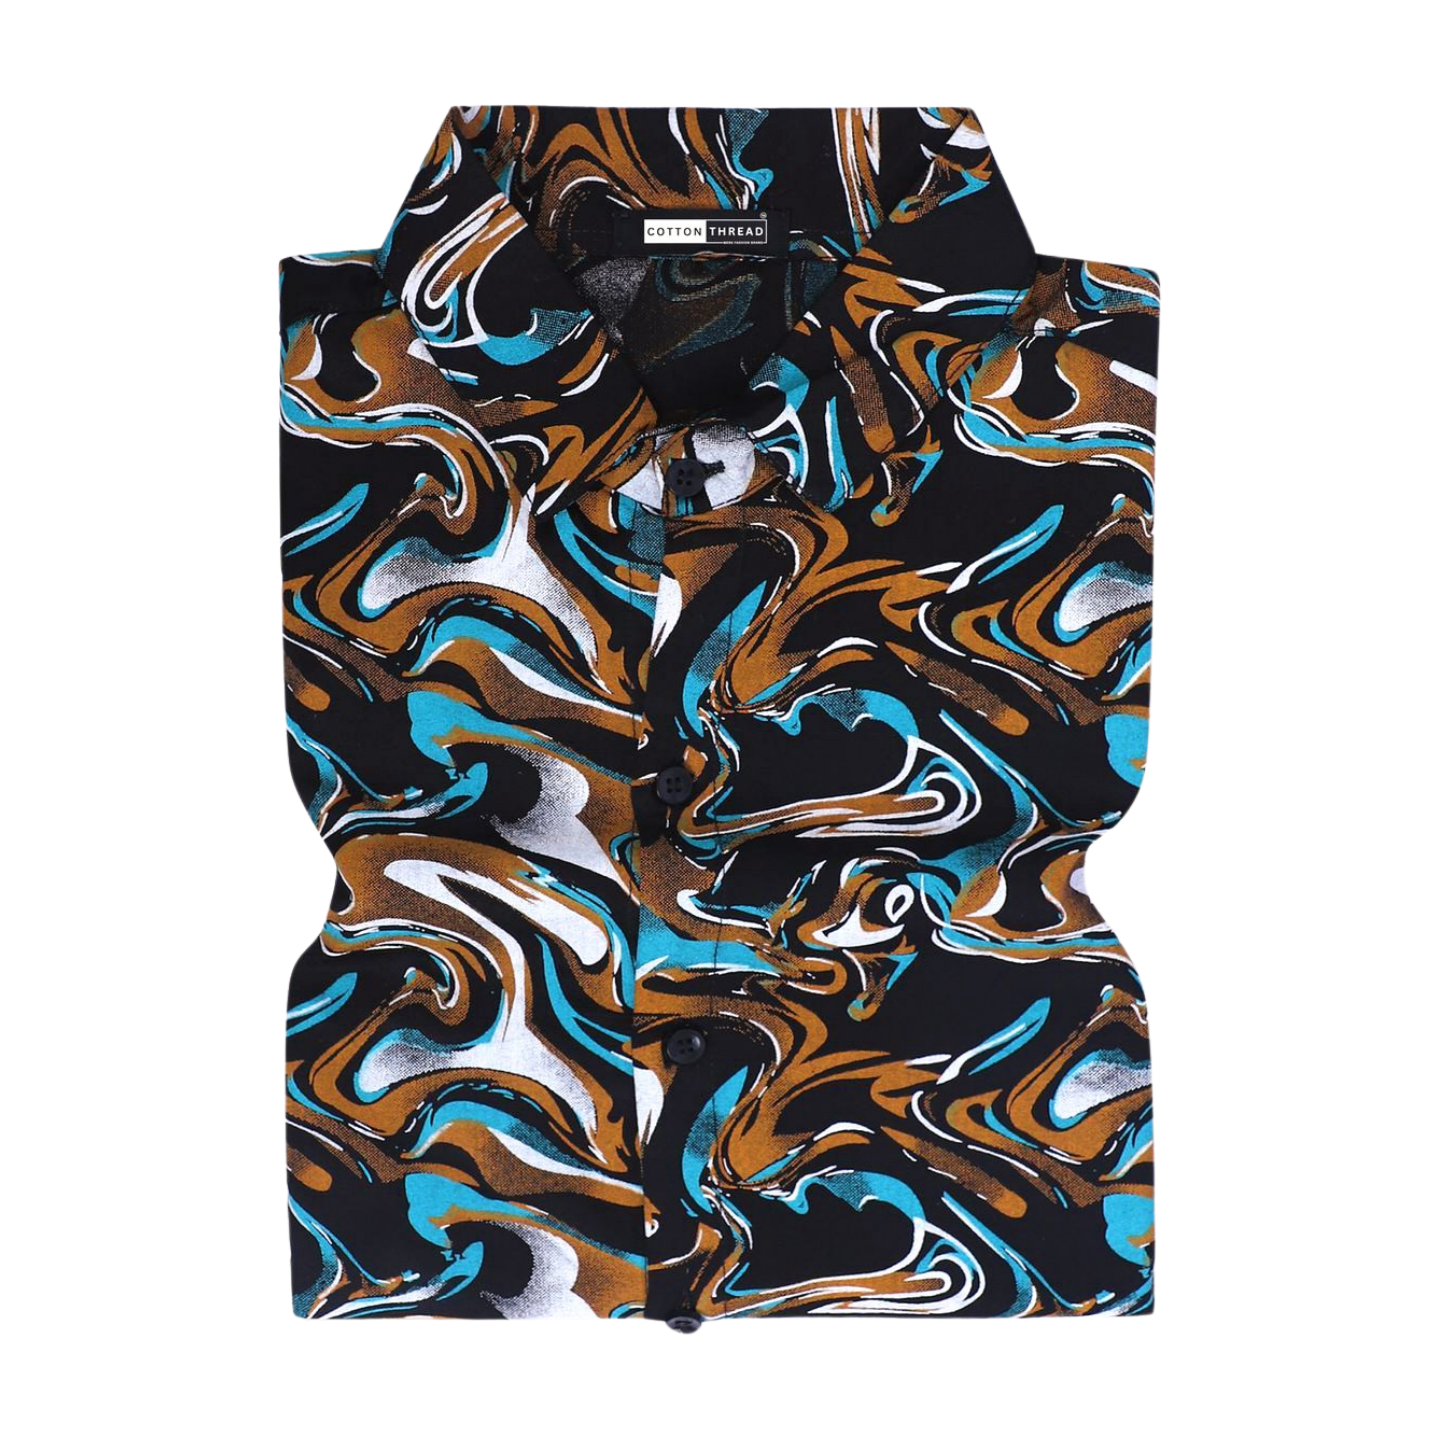 Men's Premium Cotton Half Sleeve Multicolored Swirly Printed Shirt By Cotton Thread (PRT-087)